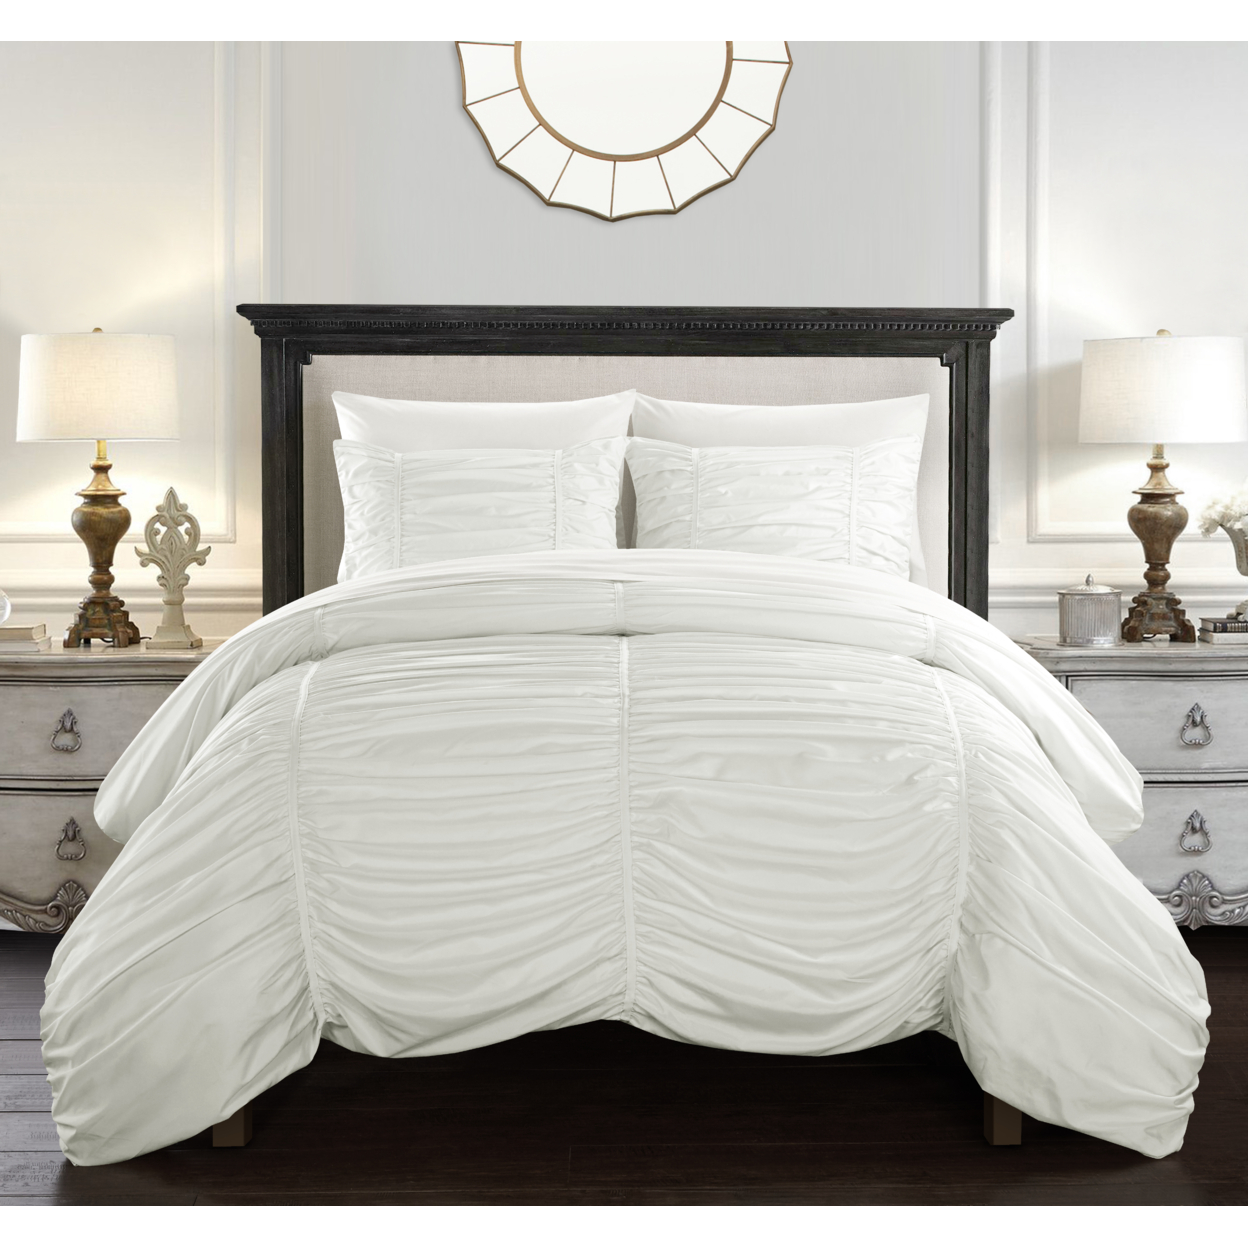 Kiela 2 Pc Or 3 Pc Ruched Comforter Set - White, King